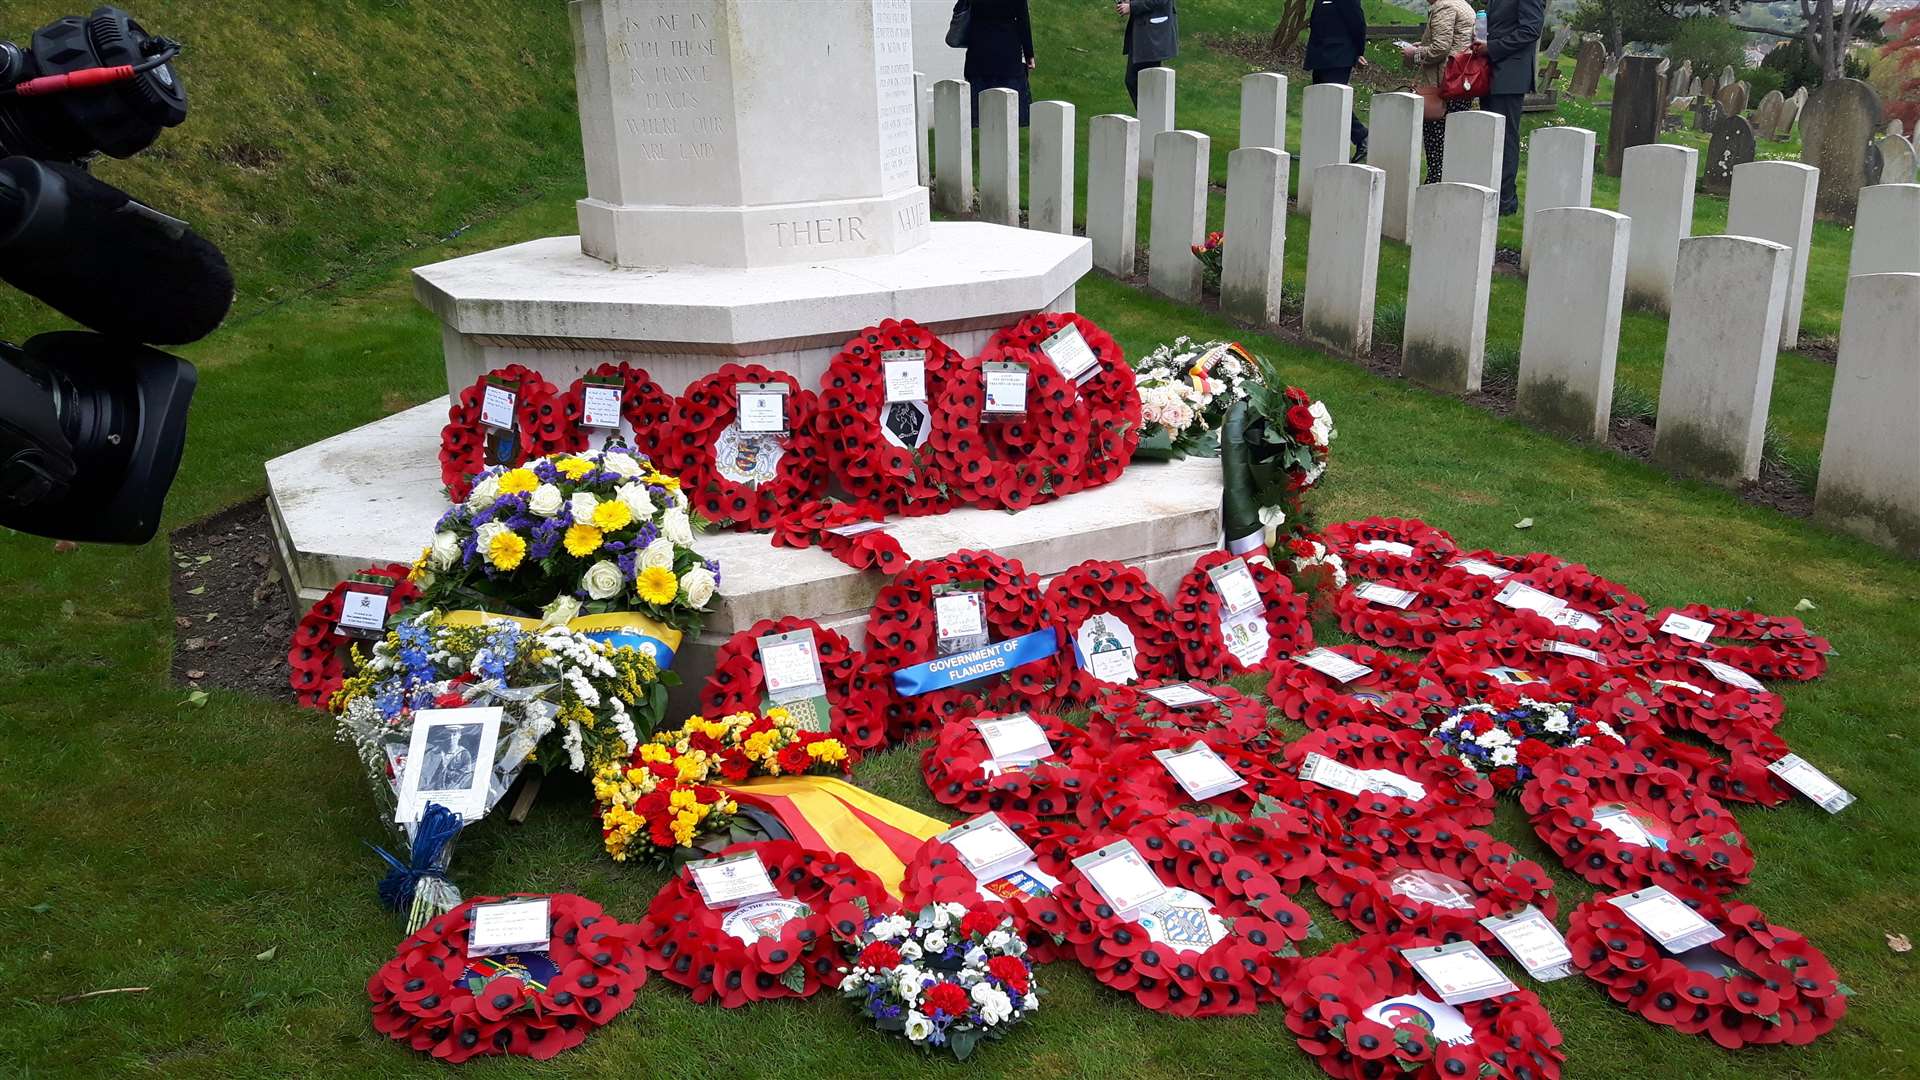 The wreaths laid at the cemetery's raid memorial